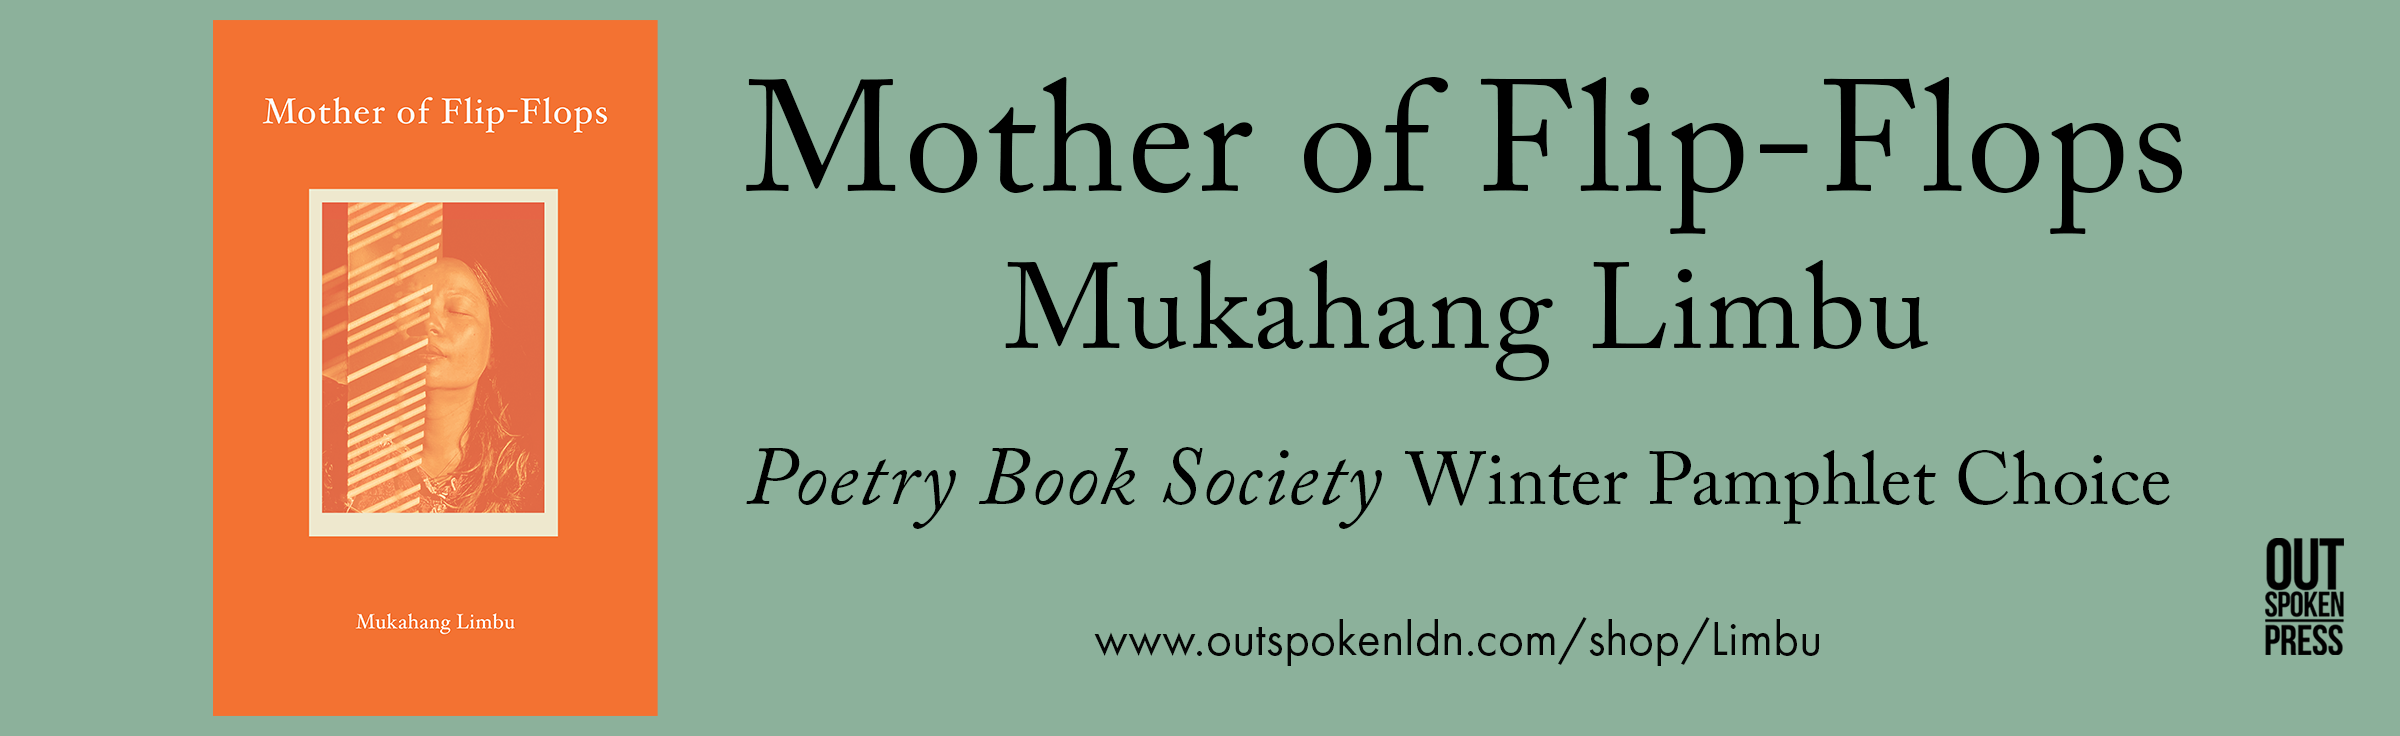 Mukahang Limbu Mother of Flip Flops PBS pamphlet choice shop banner.png